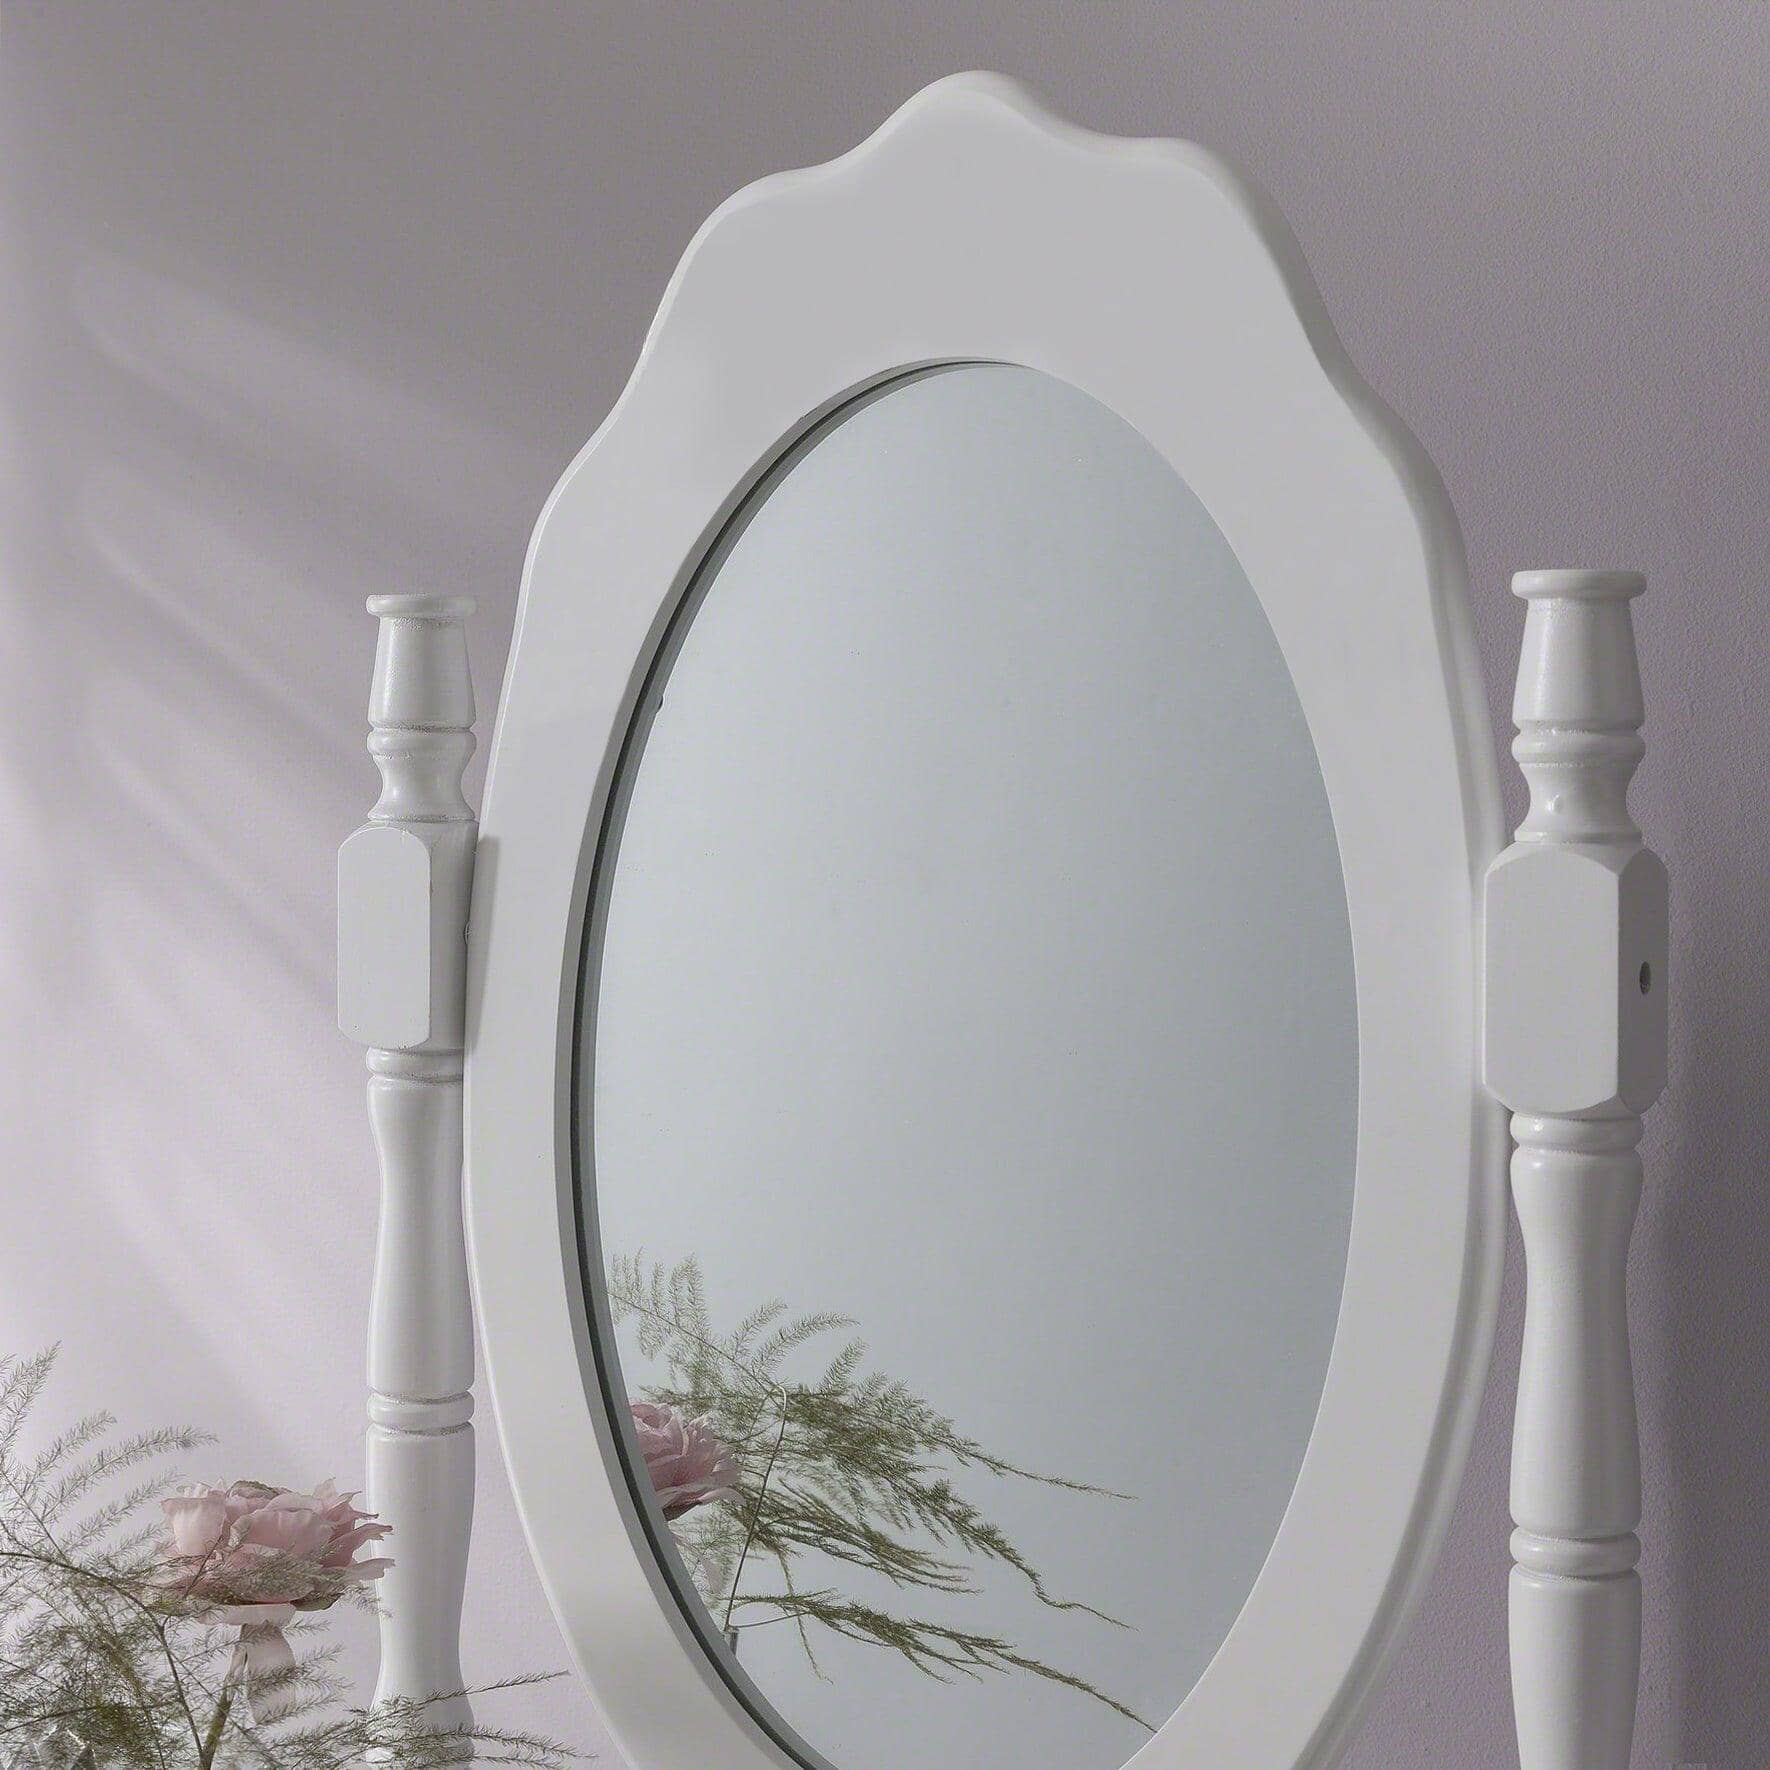 Capri White Dressing Table, Stool & Mirror Set - Laura James